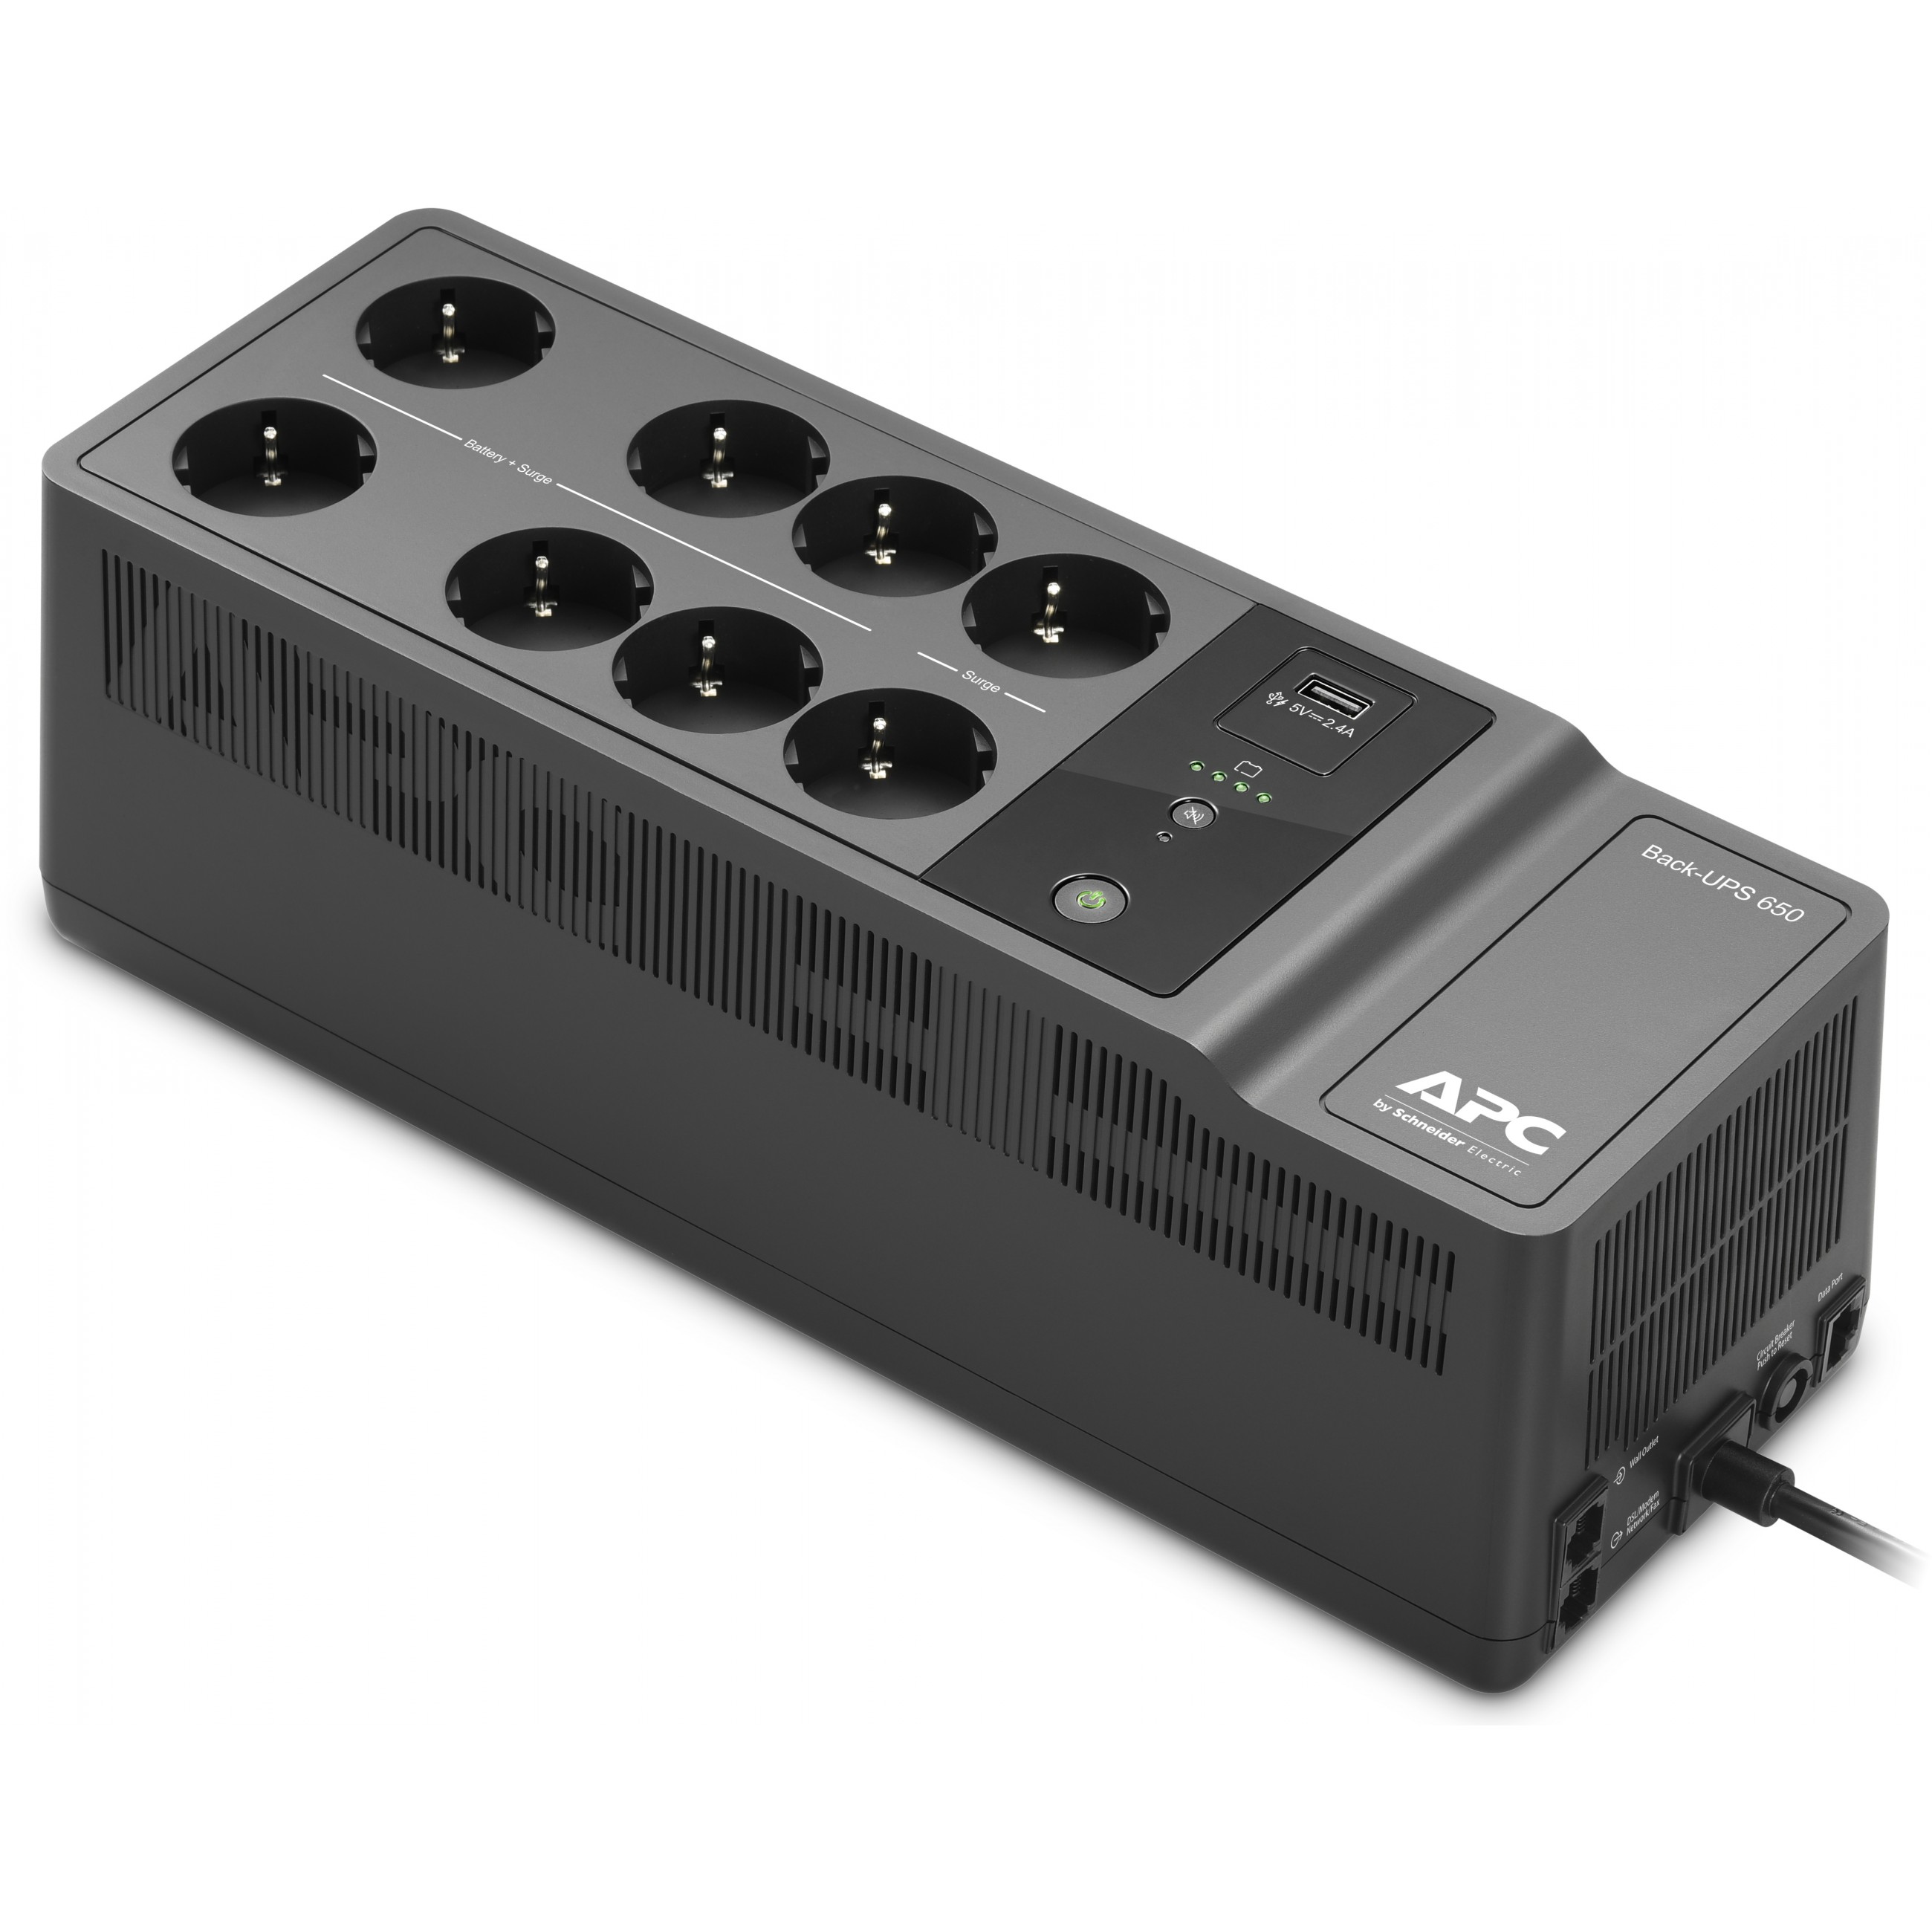 APC Back-UPS 650VA 230V 1 USB charging port - (Offline-) USV uninterruptible power supply (UPS)